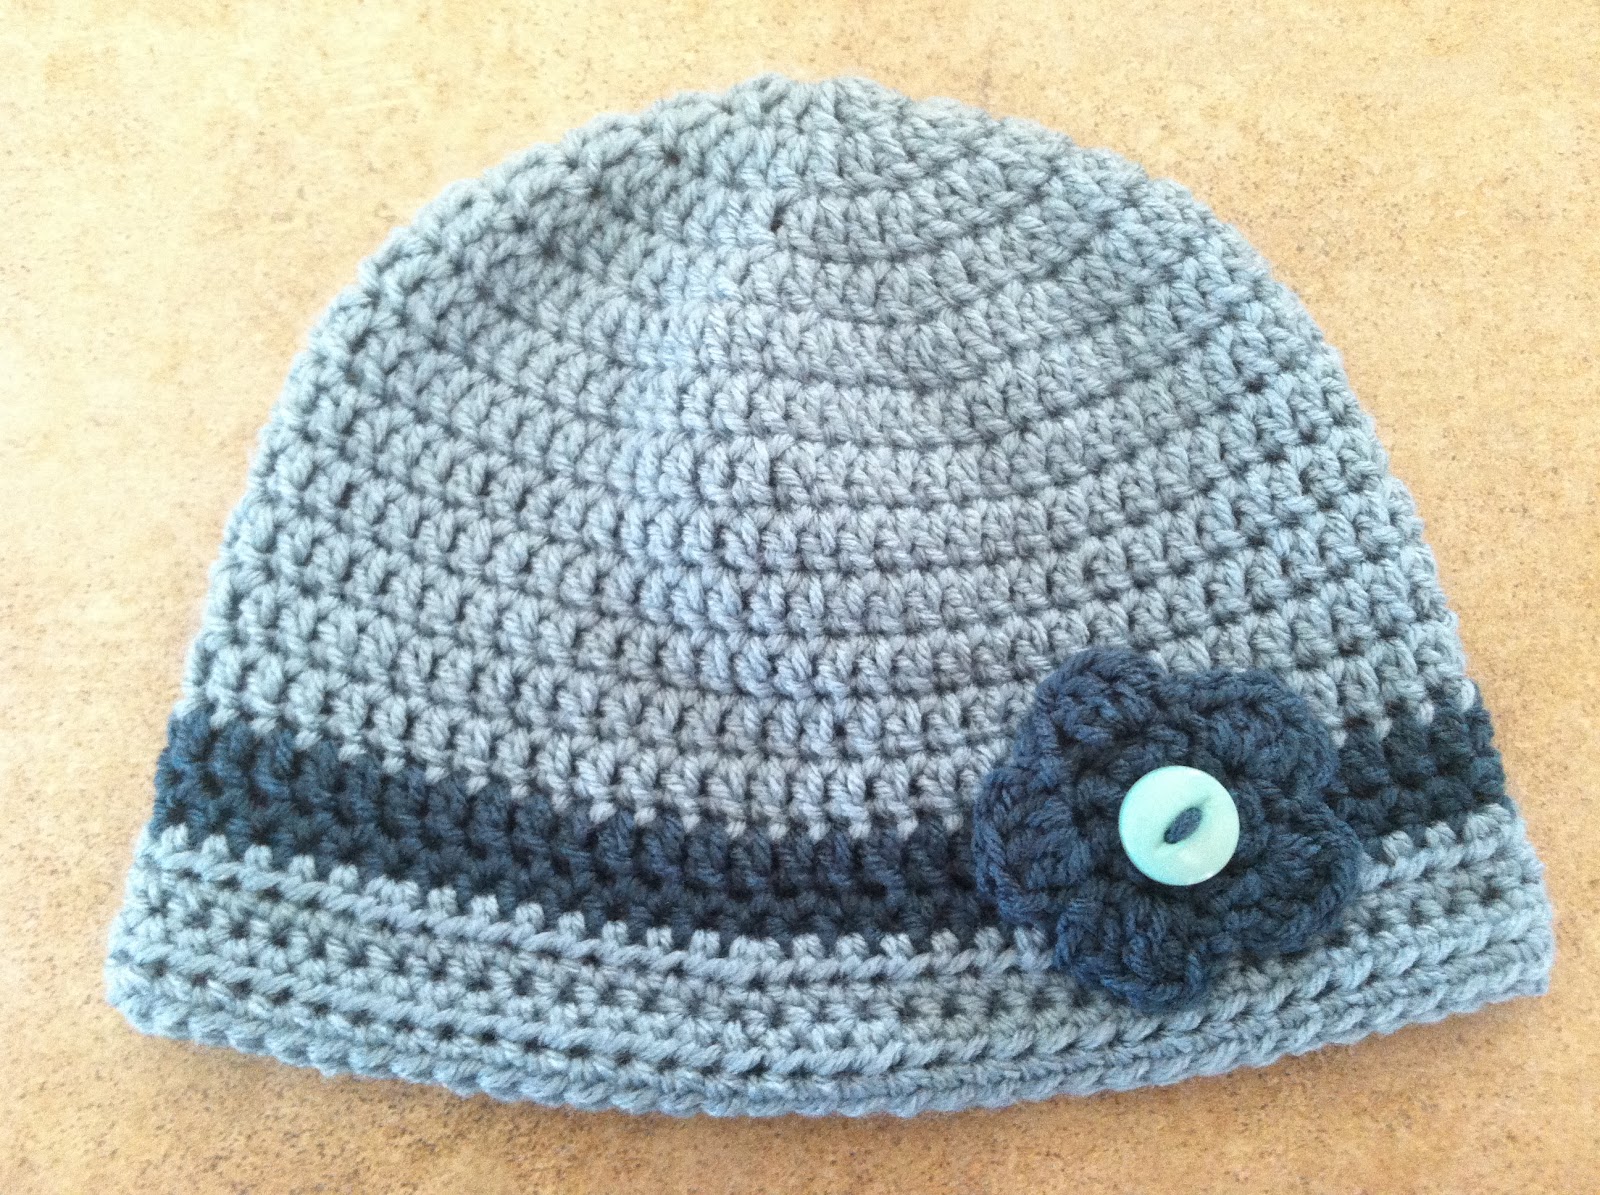 Crochet For Cancer: Chemo Hat & Flower Patterns